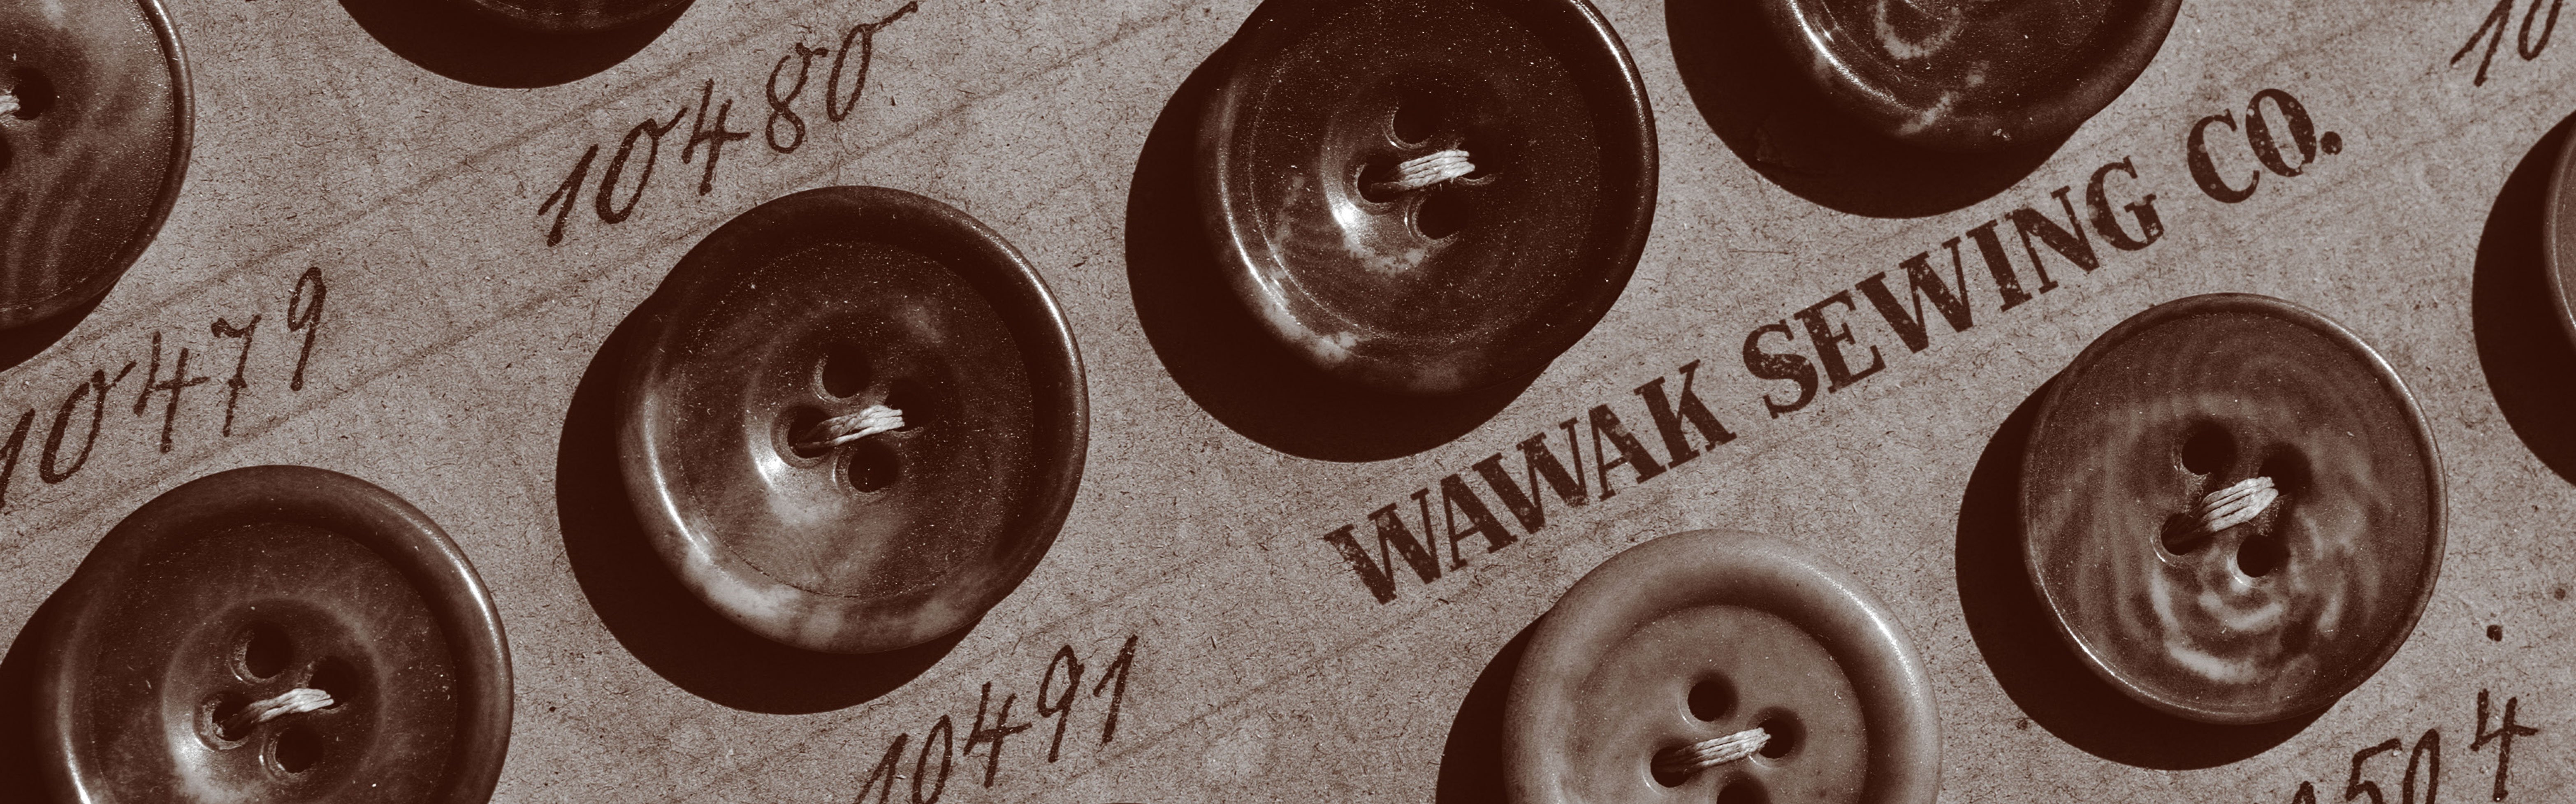 WAWAK Sewing Co. Vintage Button Chart